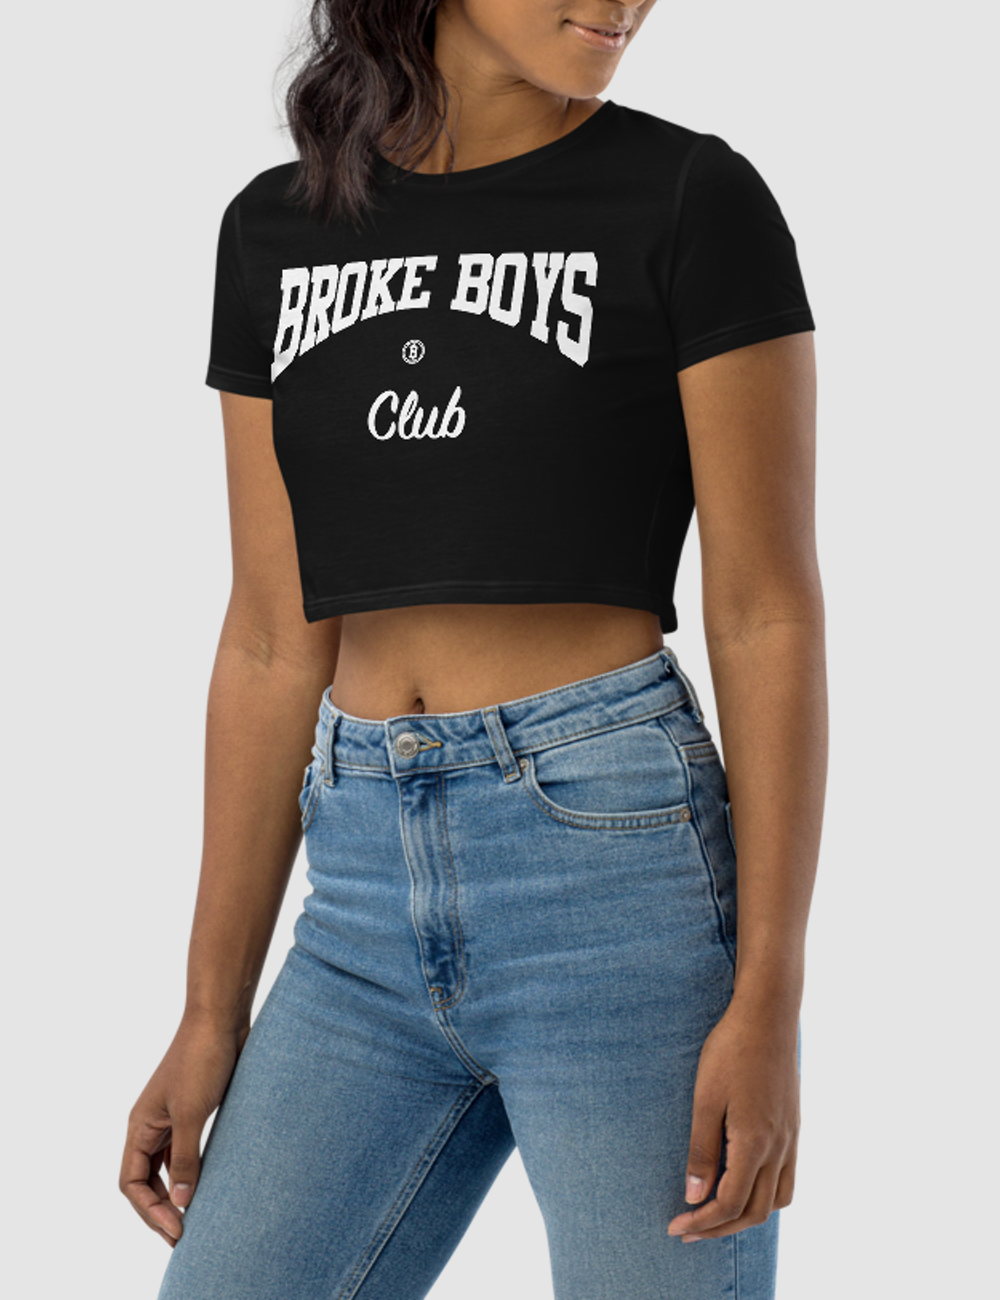 Broke Boys Club Women's Fitted Crop Top T-Shirt OniTakai